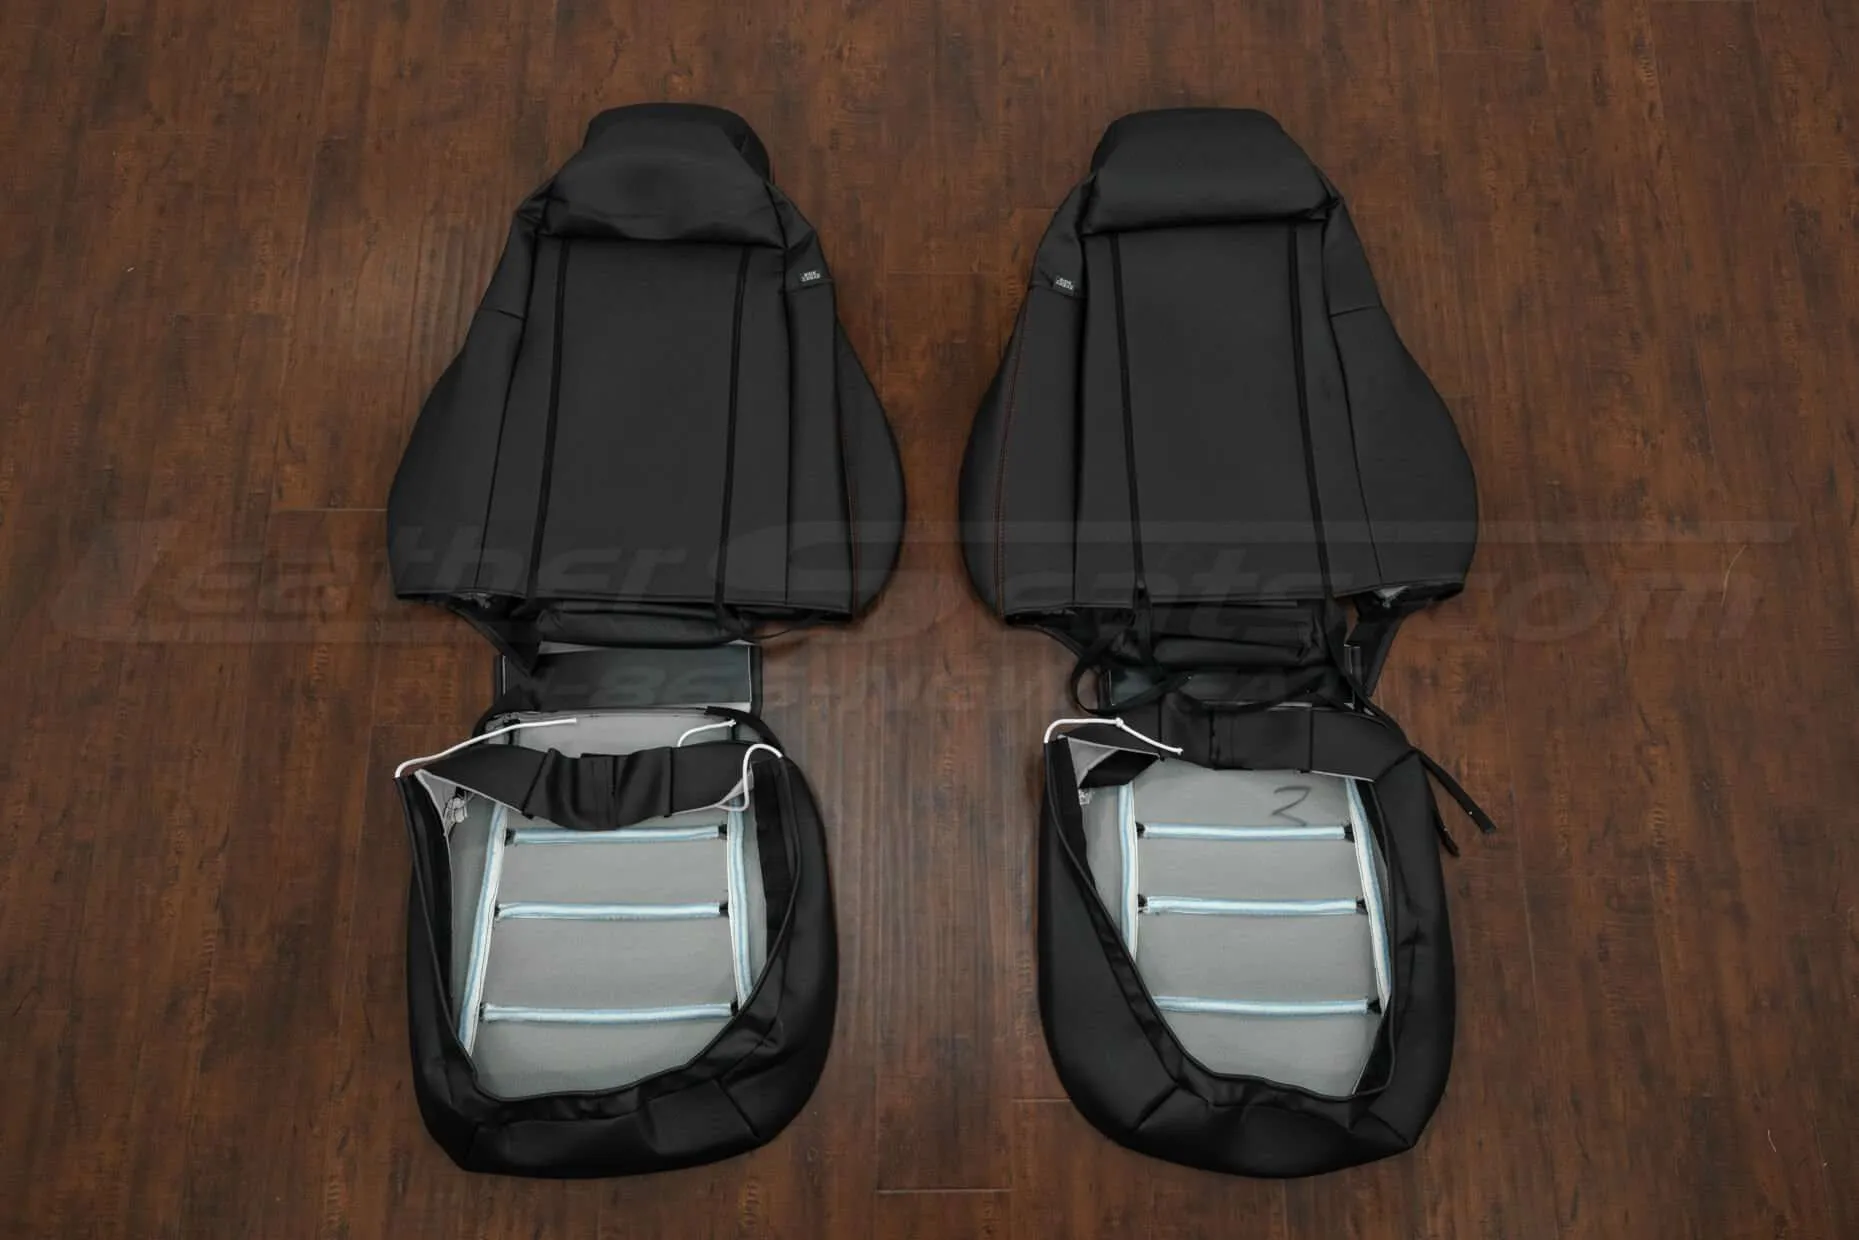 Chevrolet Corvette Leather Kit - Black - Back view of front seats